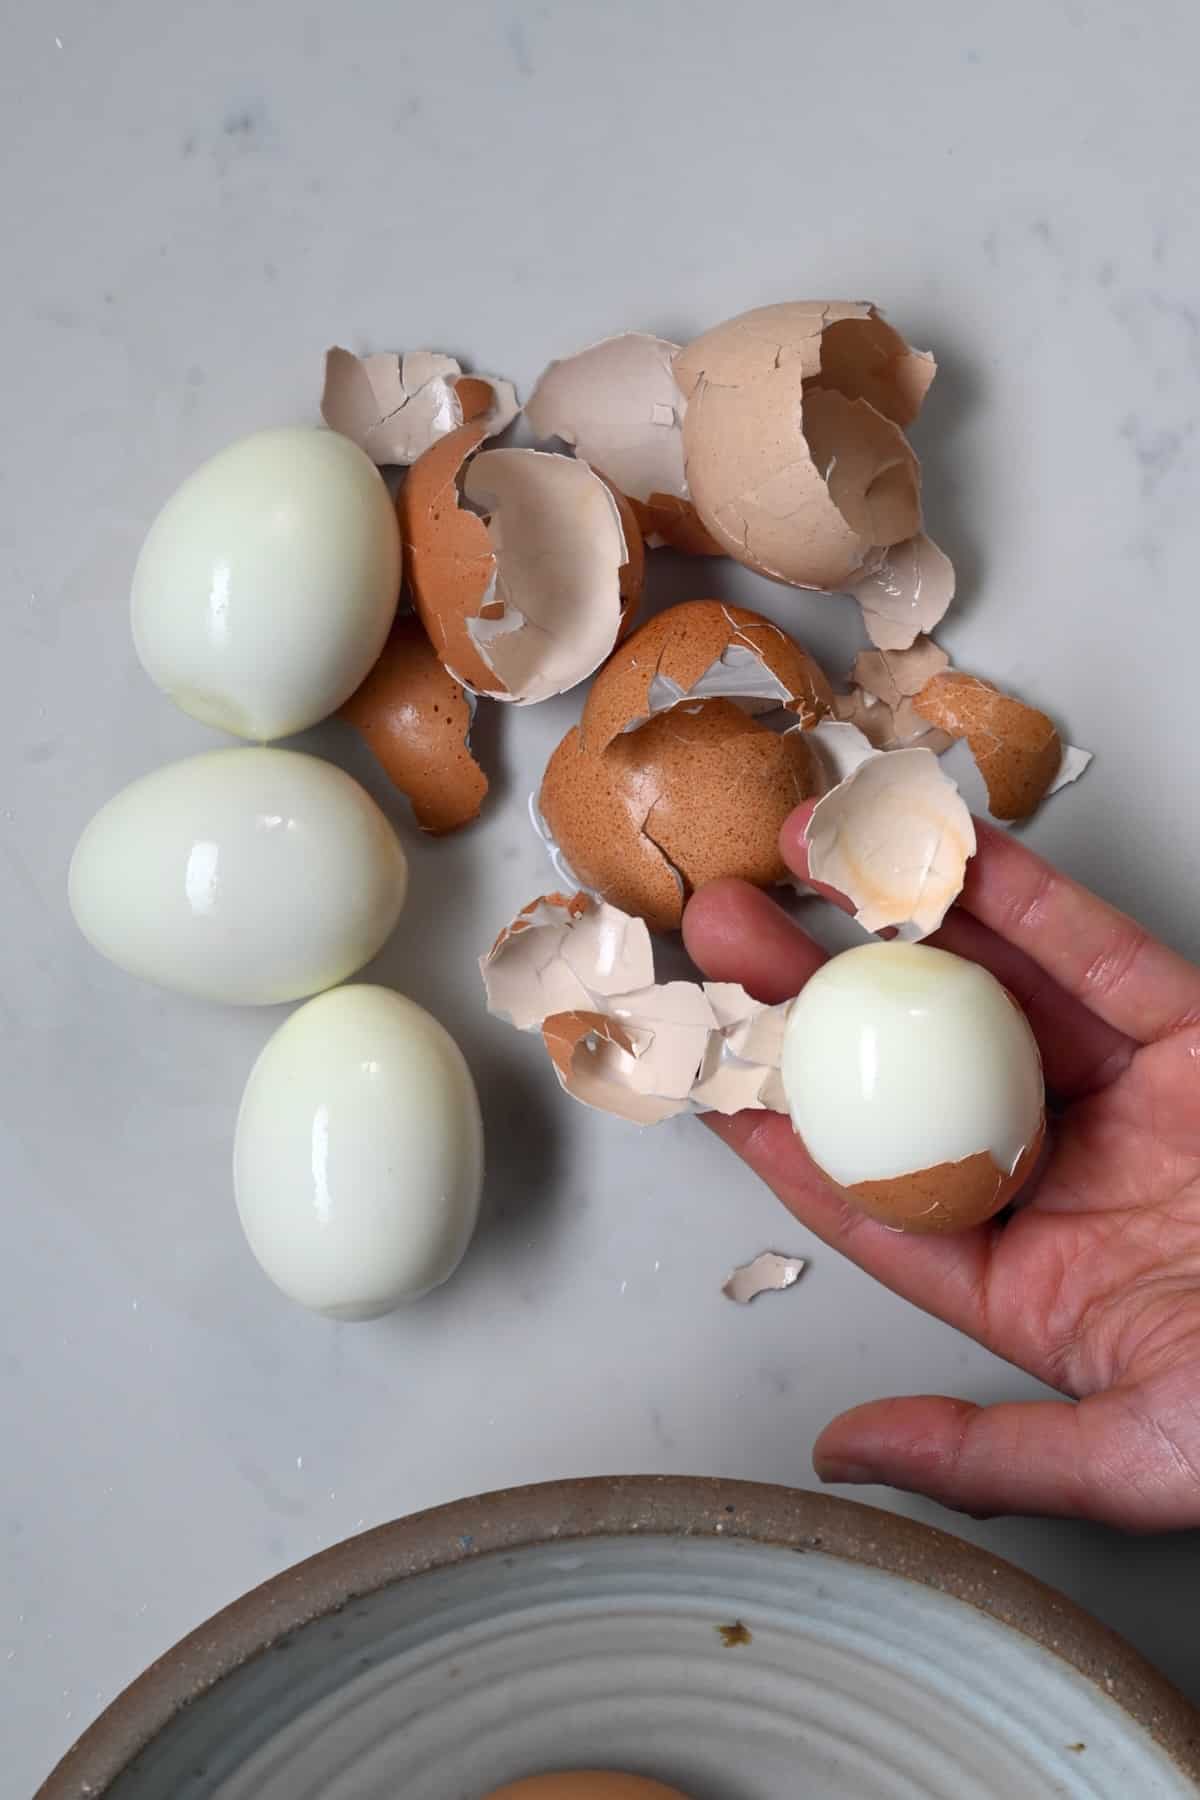 Peeling cooked eggs